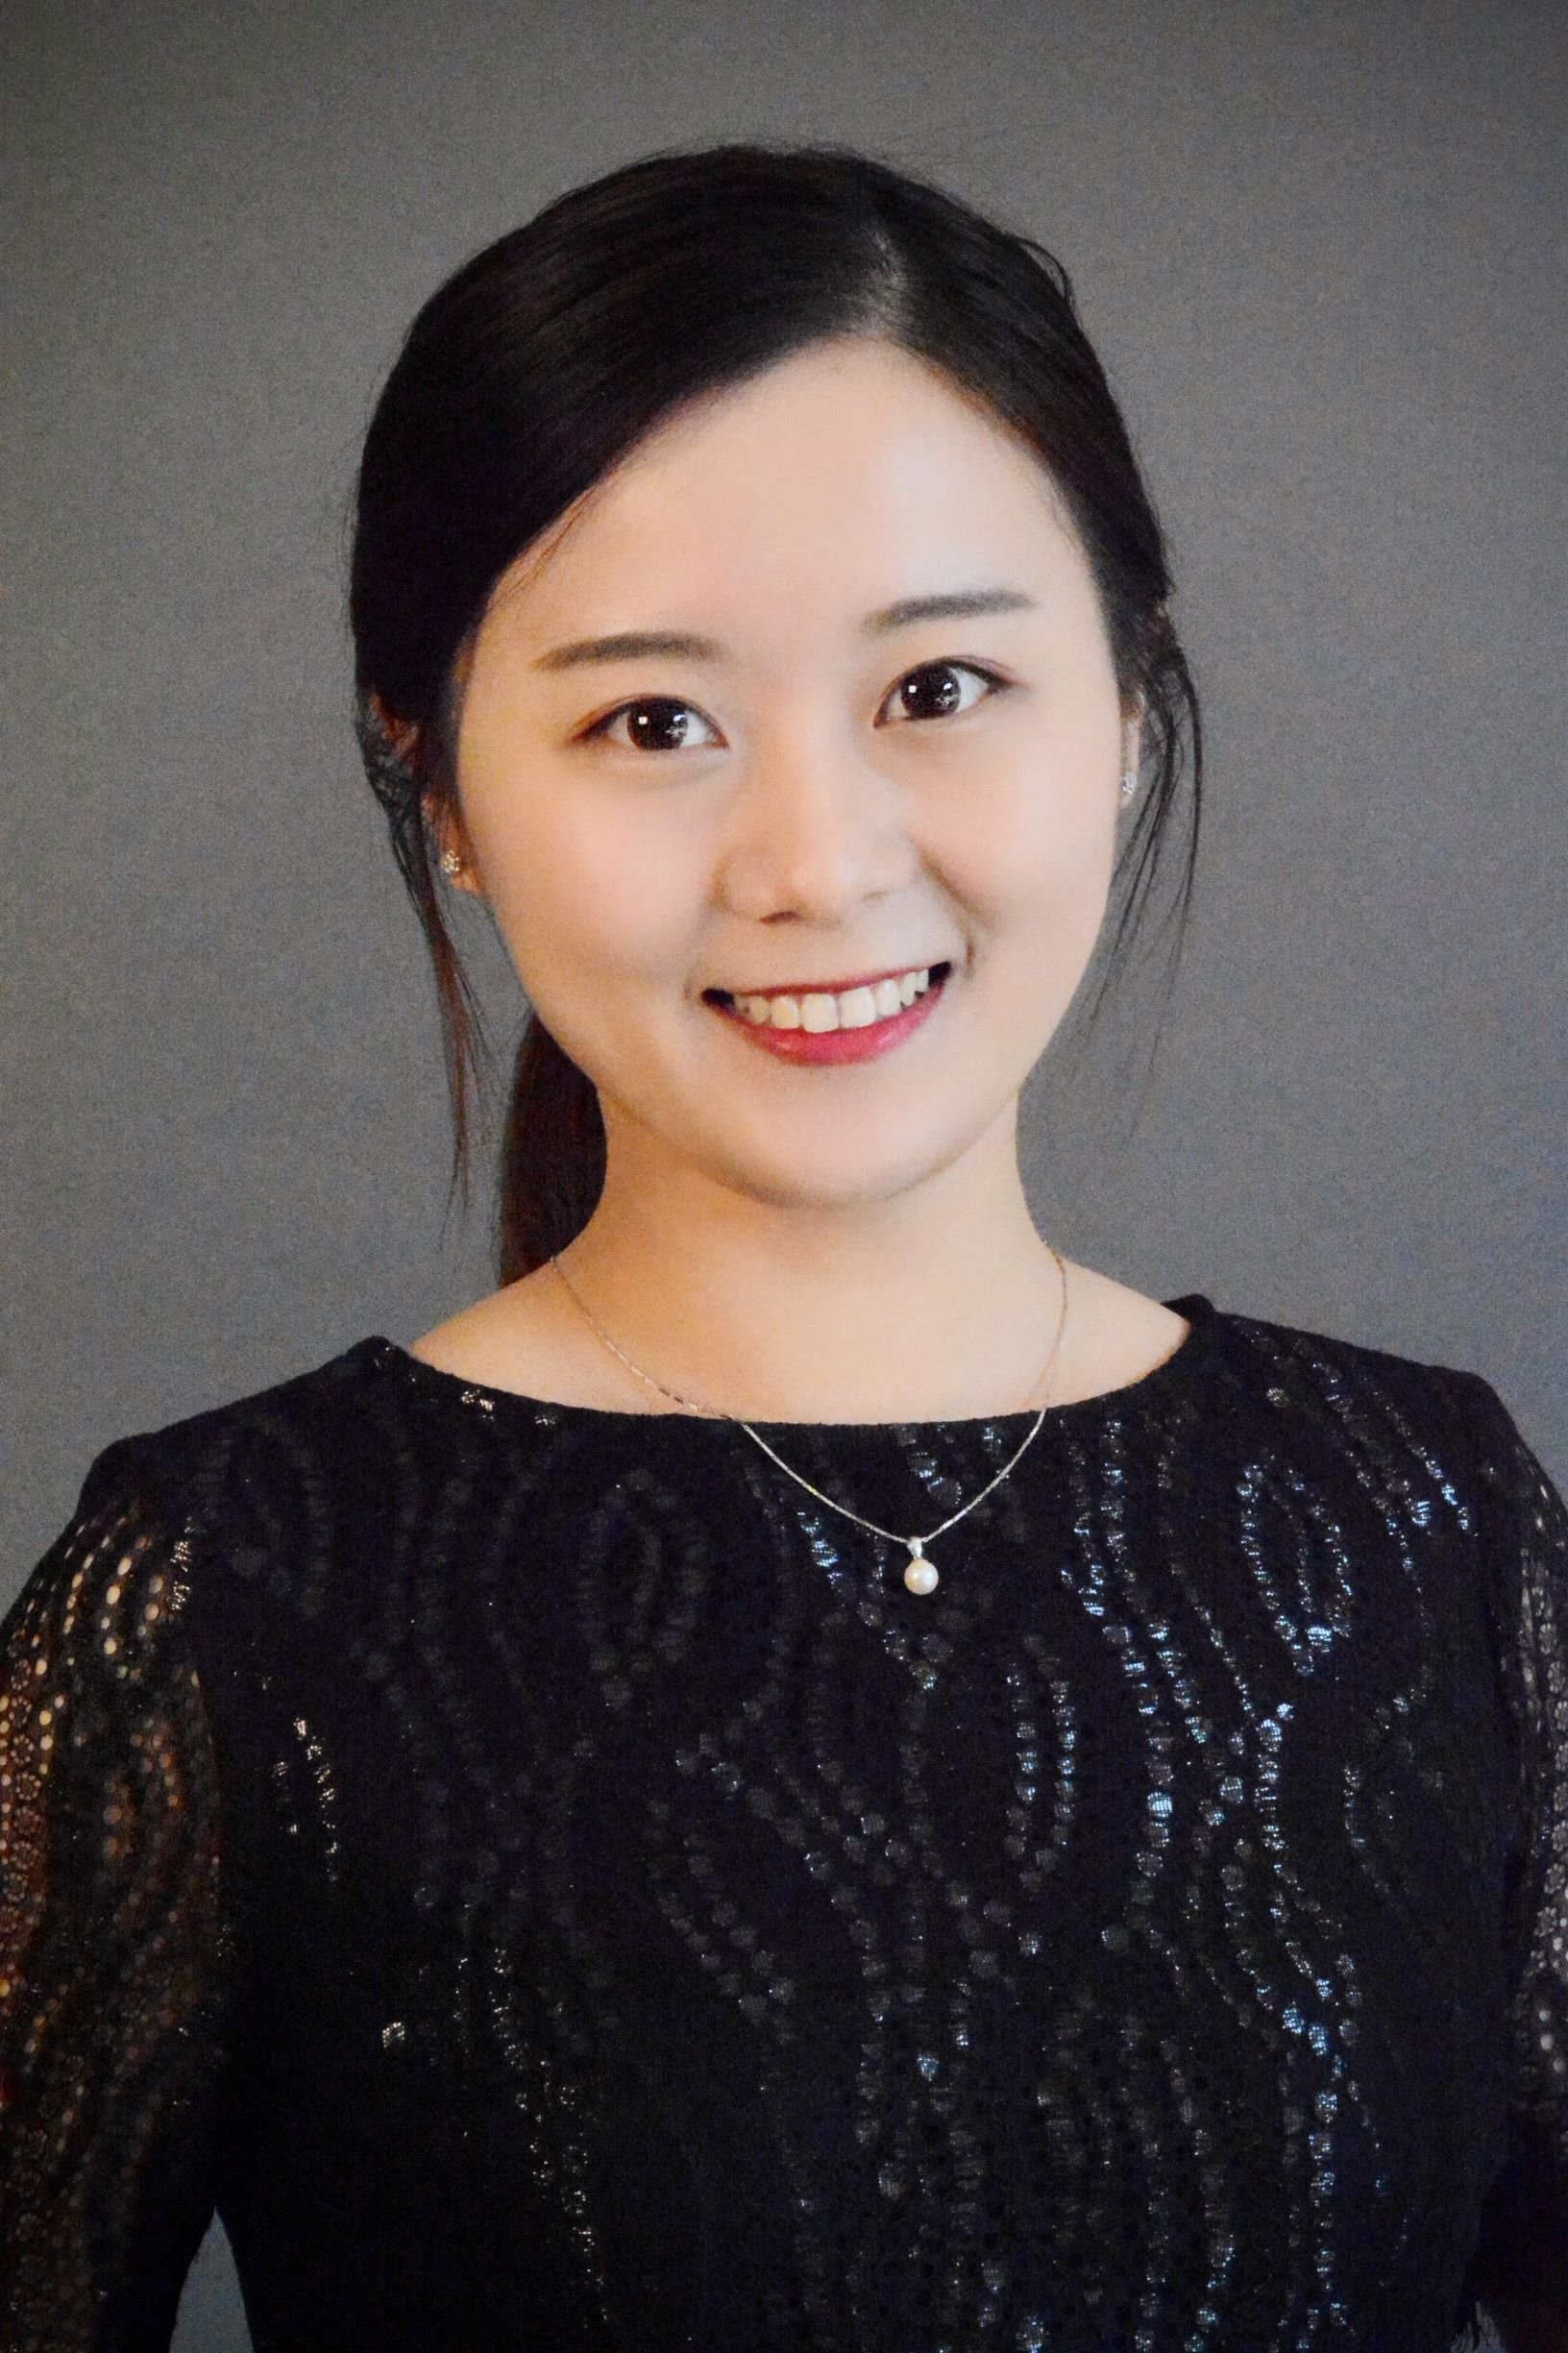 Assistant Professor at SIRPA, Fudan University; Chinese Director of Fudan-ScPo DD Program. Fox Fellow at Yale 19’. Research on international organizations.